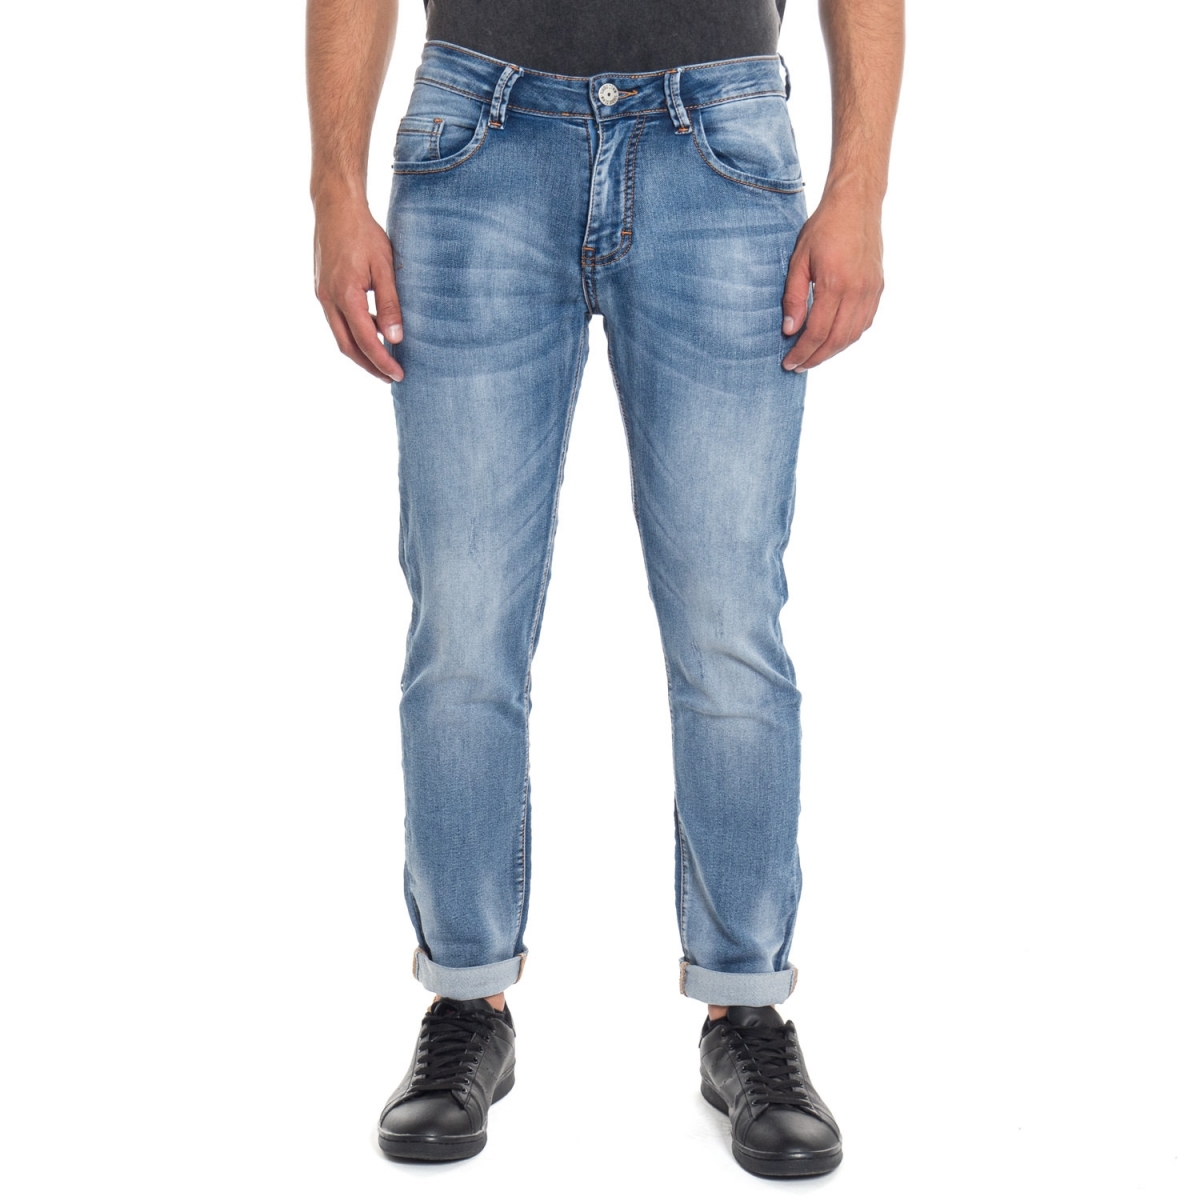 abbigliamento Jeans uomo Jeans slim fitLPHM1095 LANDEK PARK Cafedelmar Shop